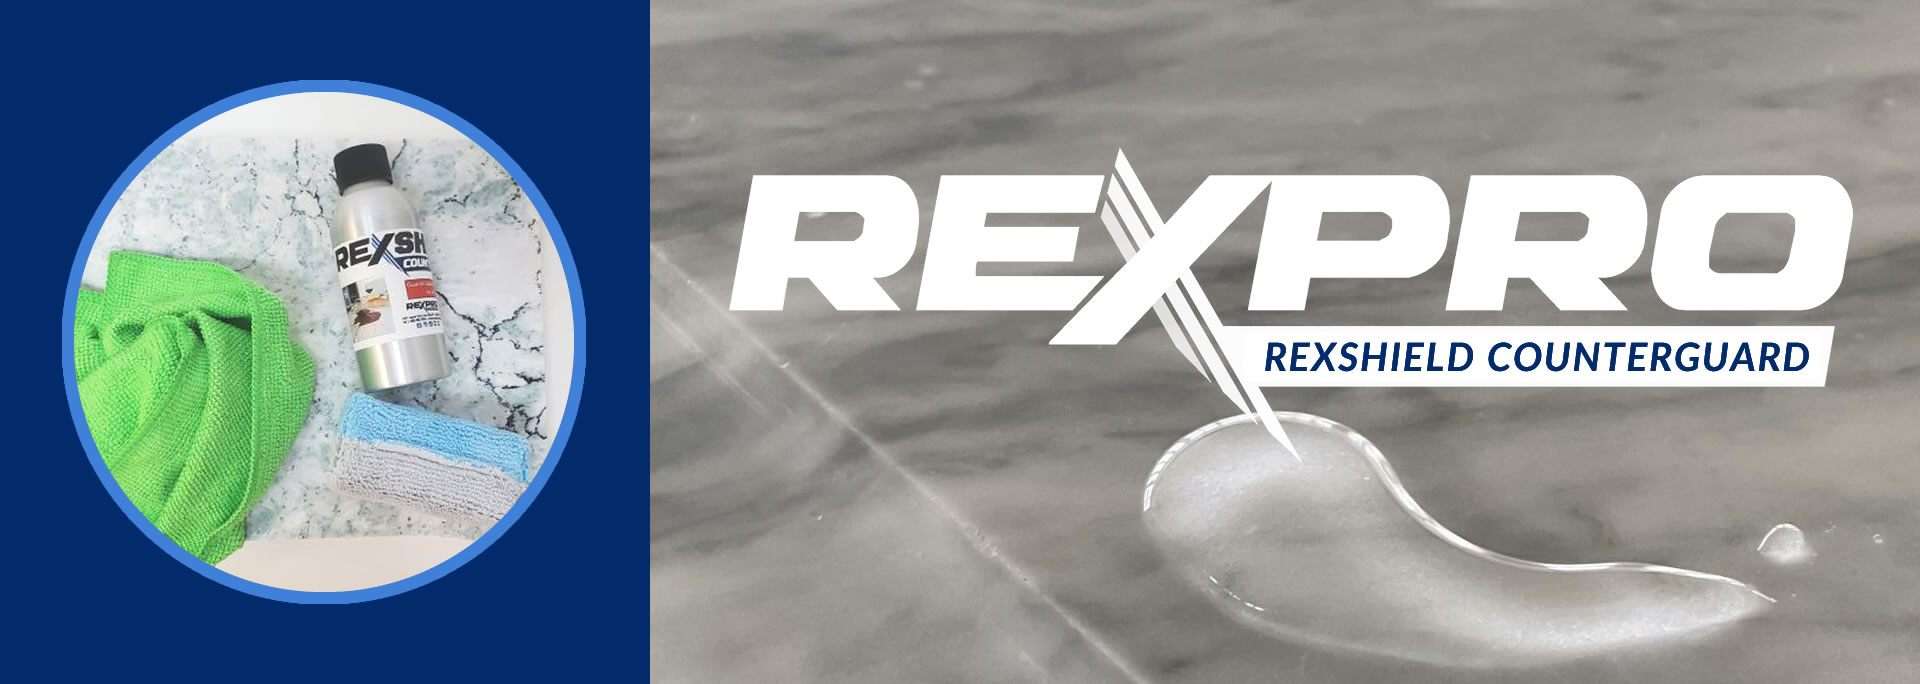 Rexpro-rexshield-counterguard-stone-coat-countertops-concrete-countertop-sealer-wet-look